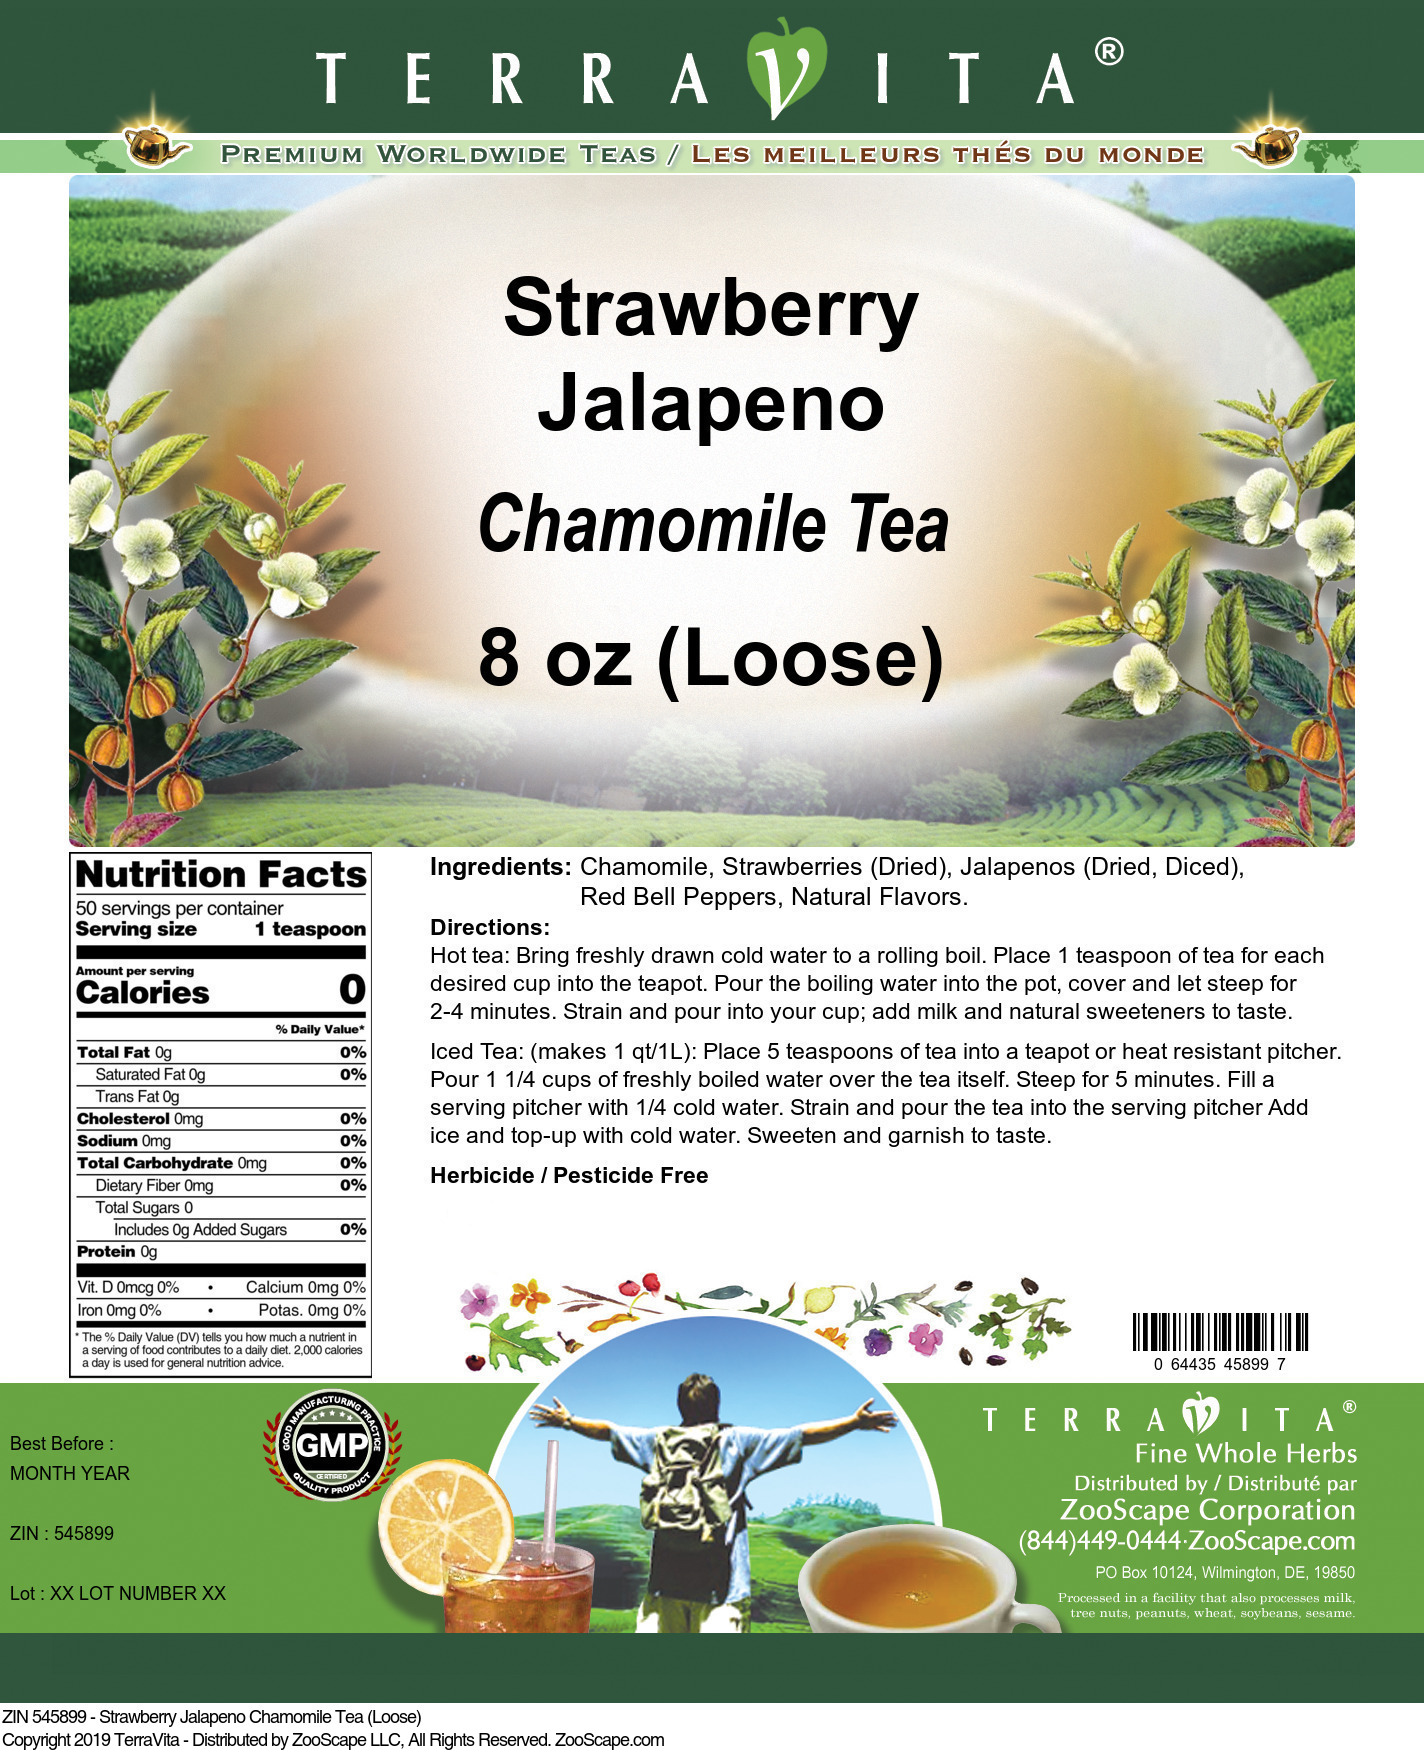 Strawberry Jalapeno Chamomile Tea (Loose) - Label